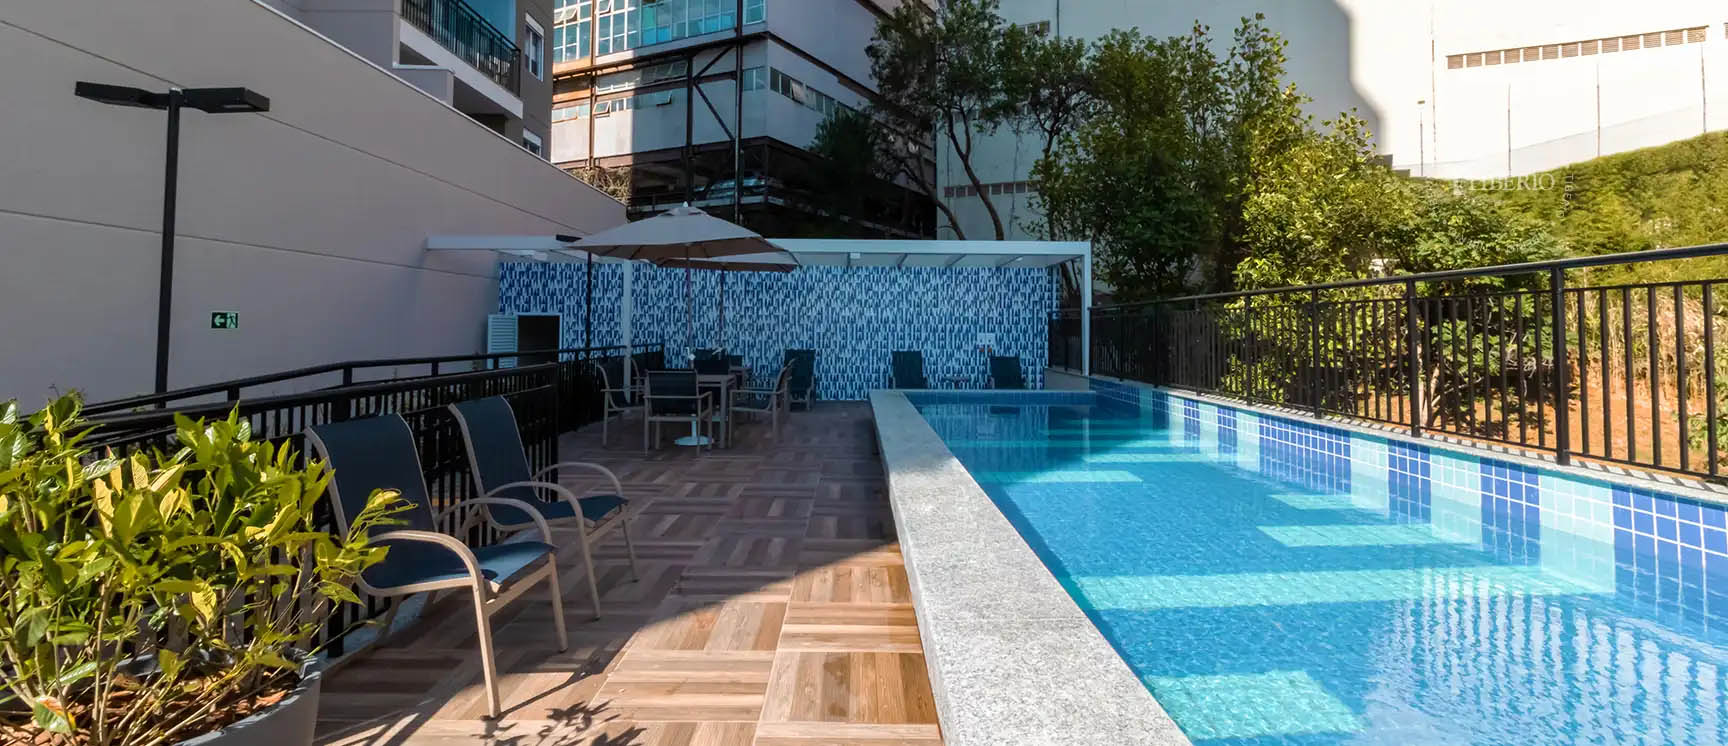 Enorme piscina – Foto de SESC Venda Nova, Belo Horizonte - Tripadvisor